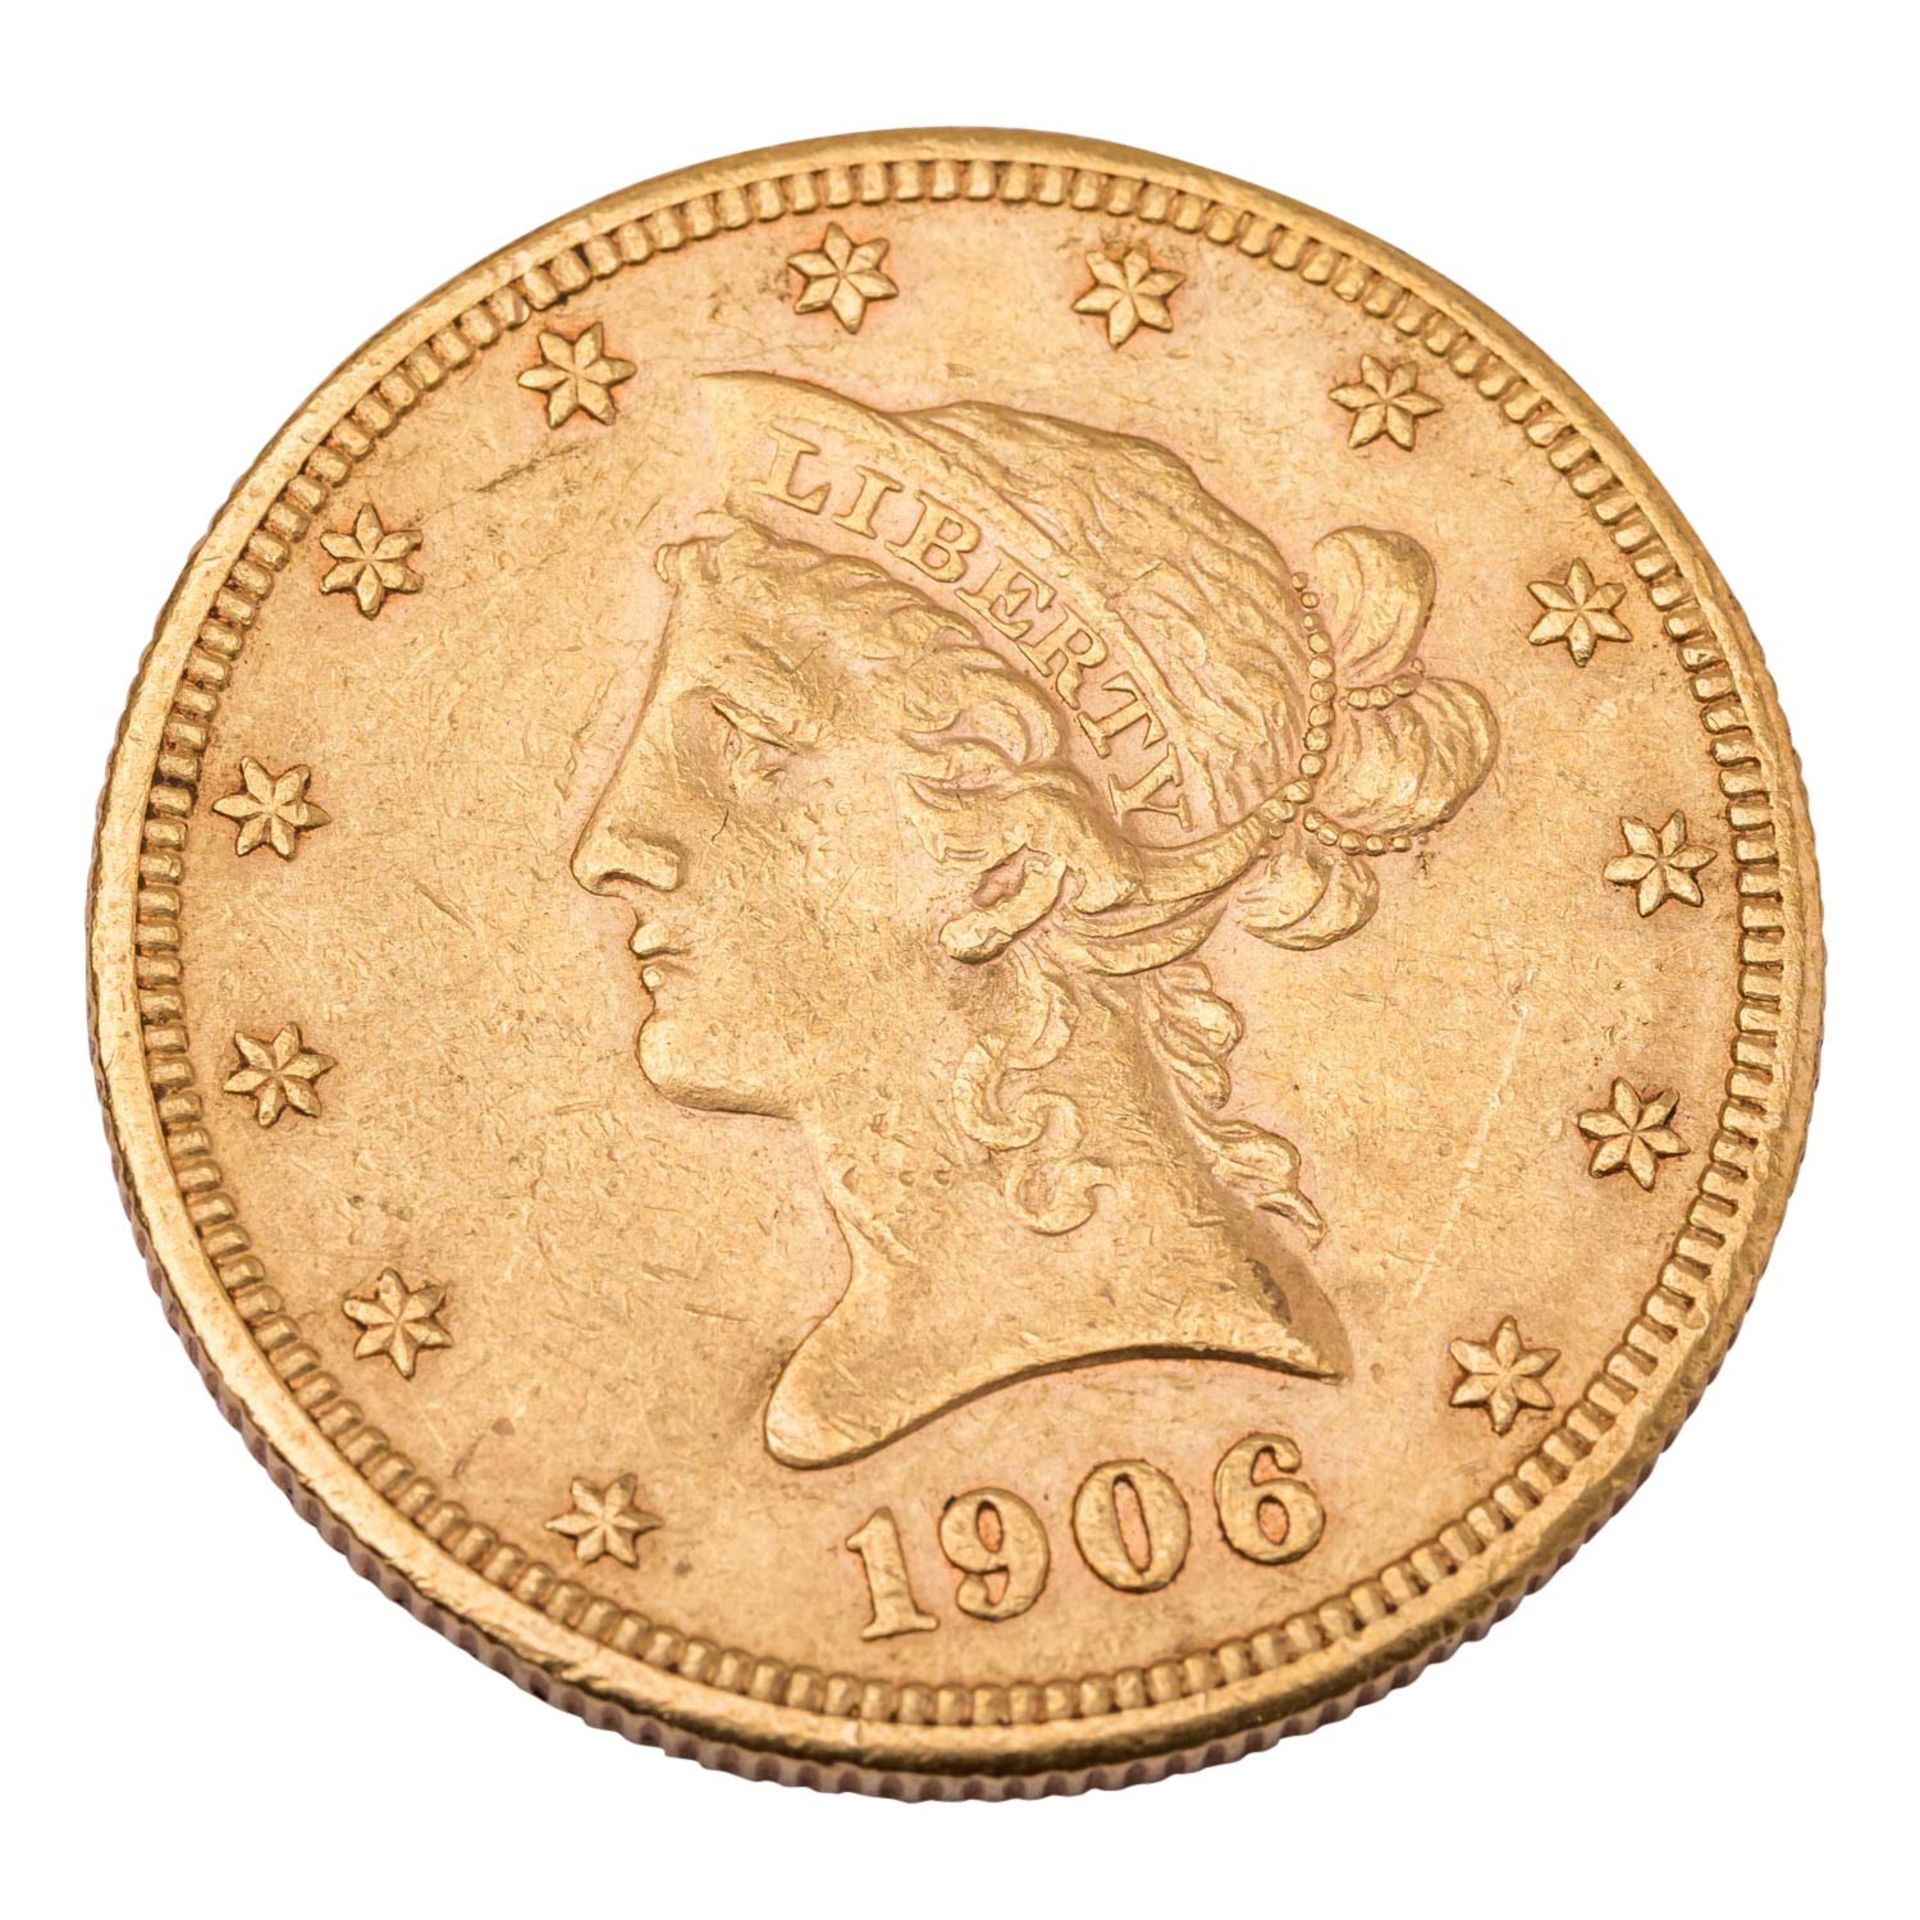 USA /GOLD - 10 $ Eagle Liberty Head 1906-S